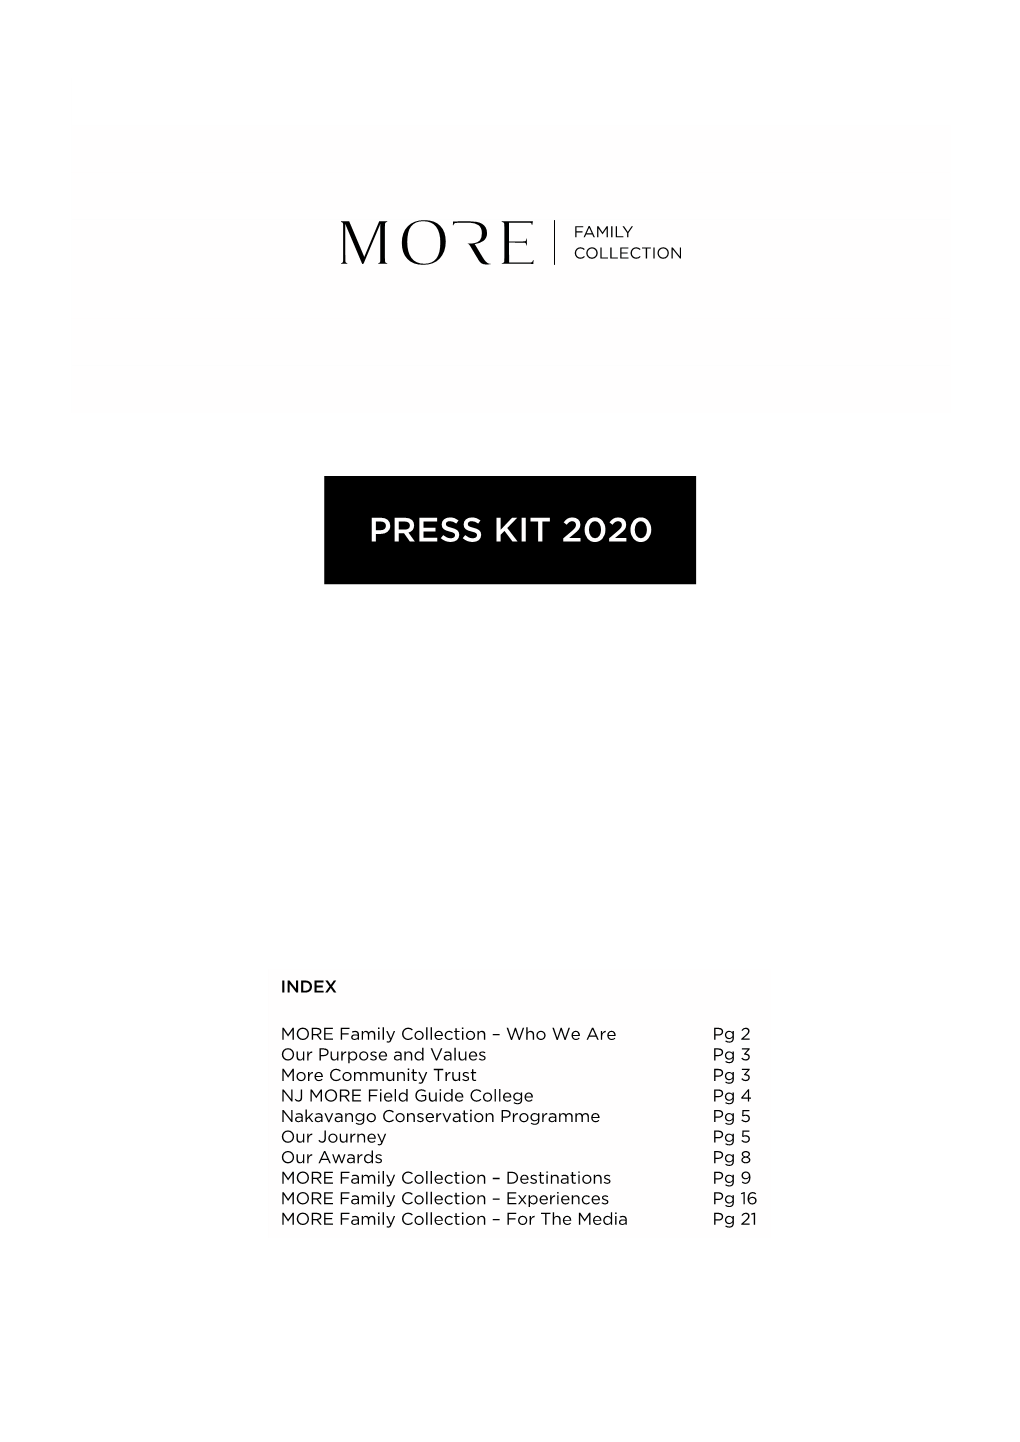 Press Kit 2020